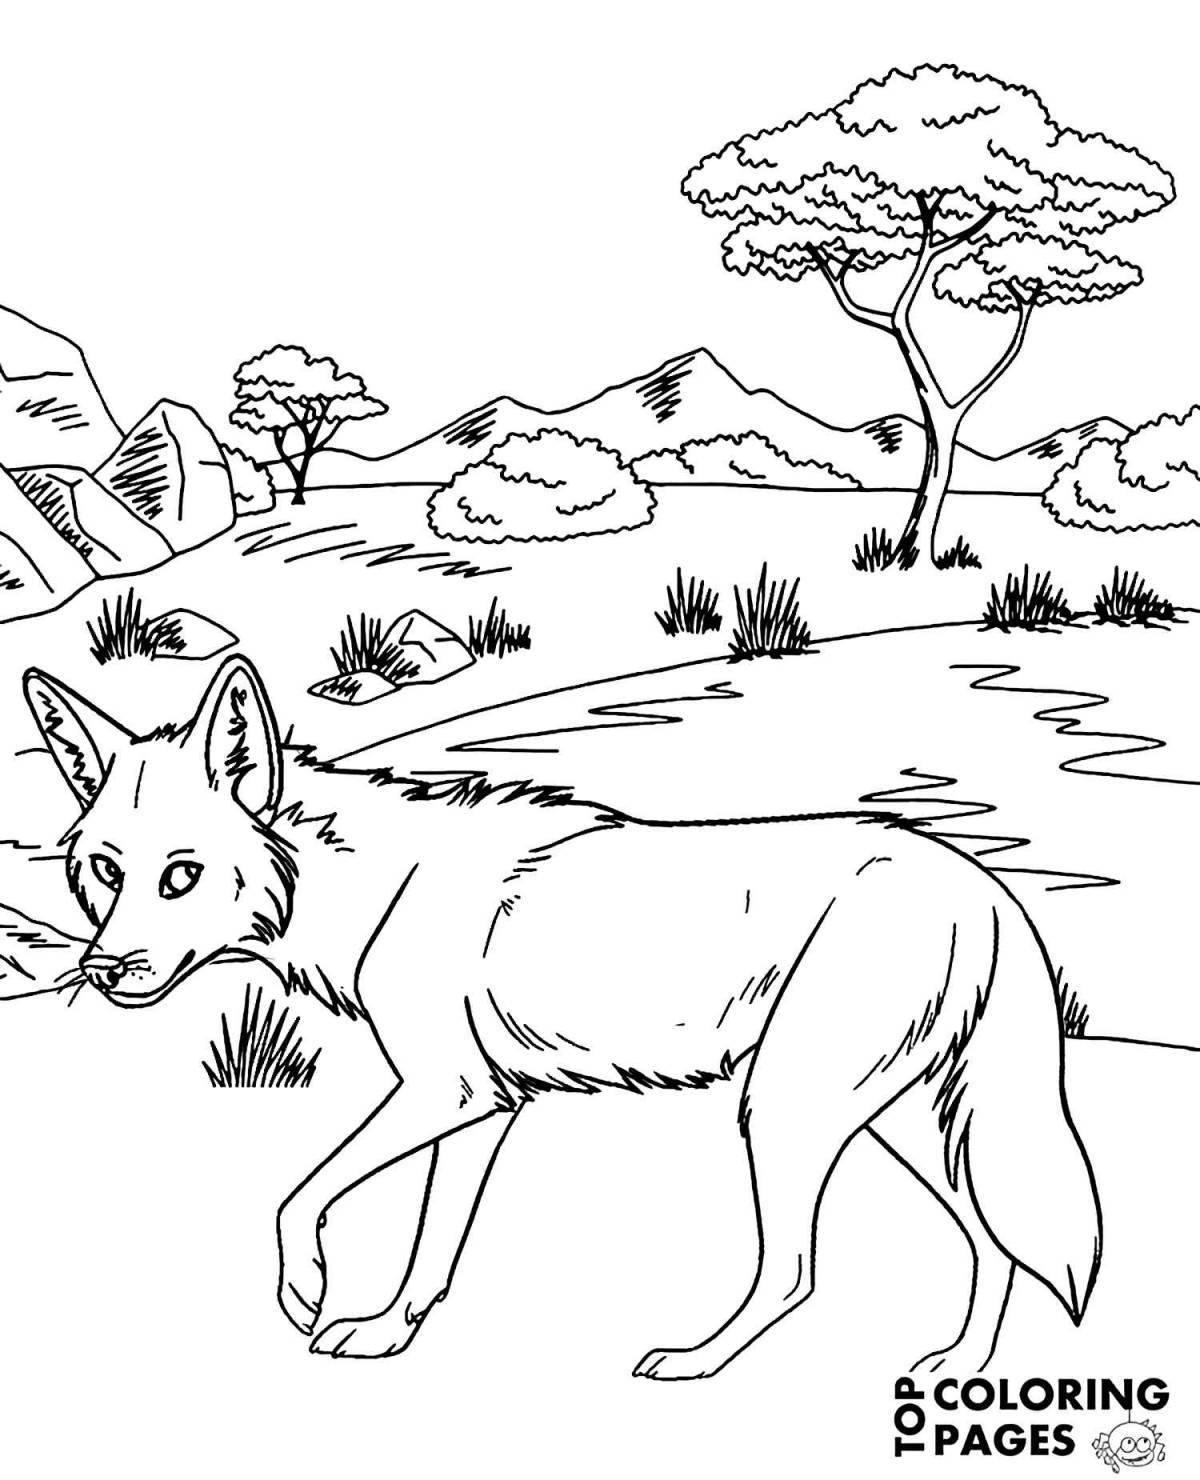 Adorable coyote coloring book